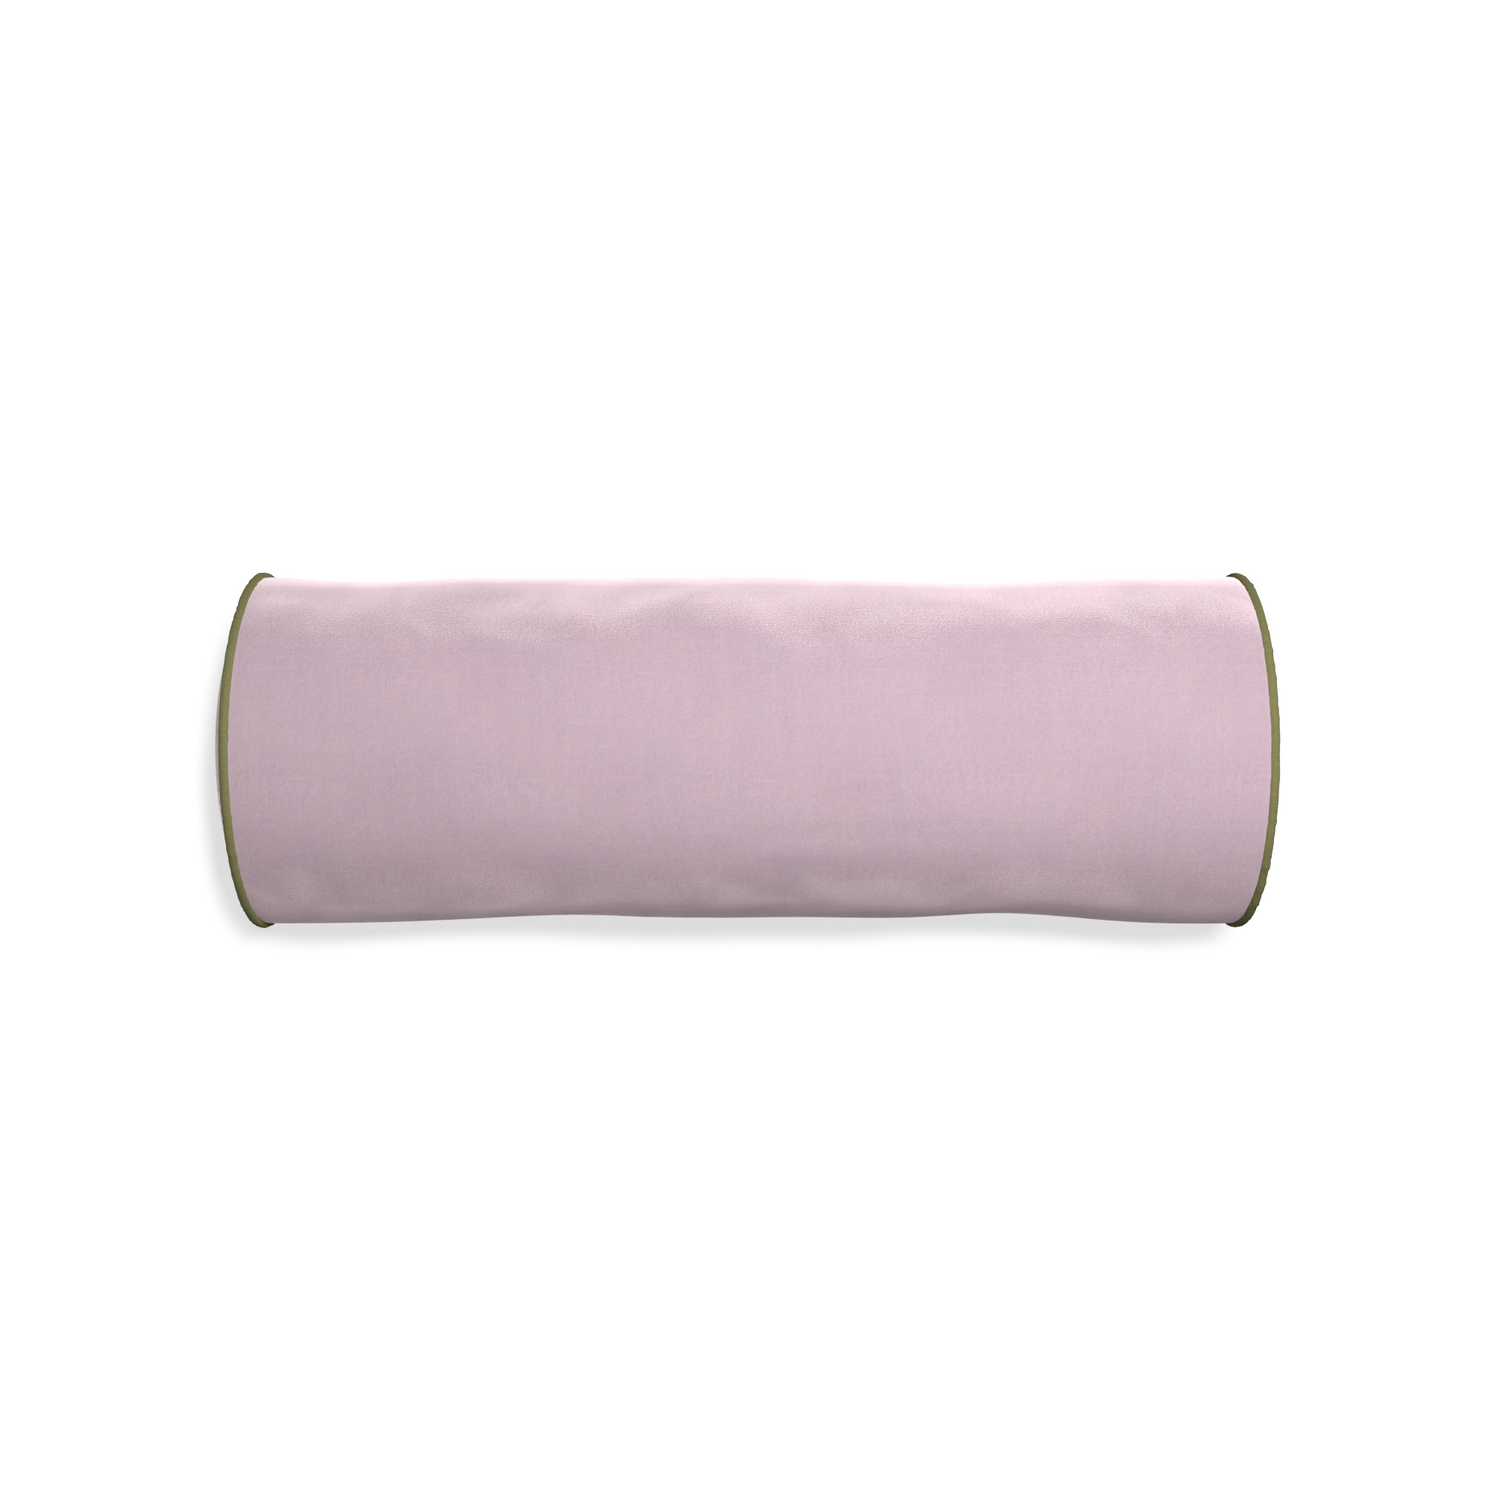 Bolster lilac velvet custom pillow with moss piping on white background